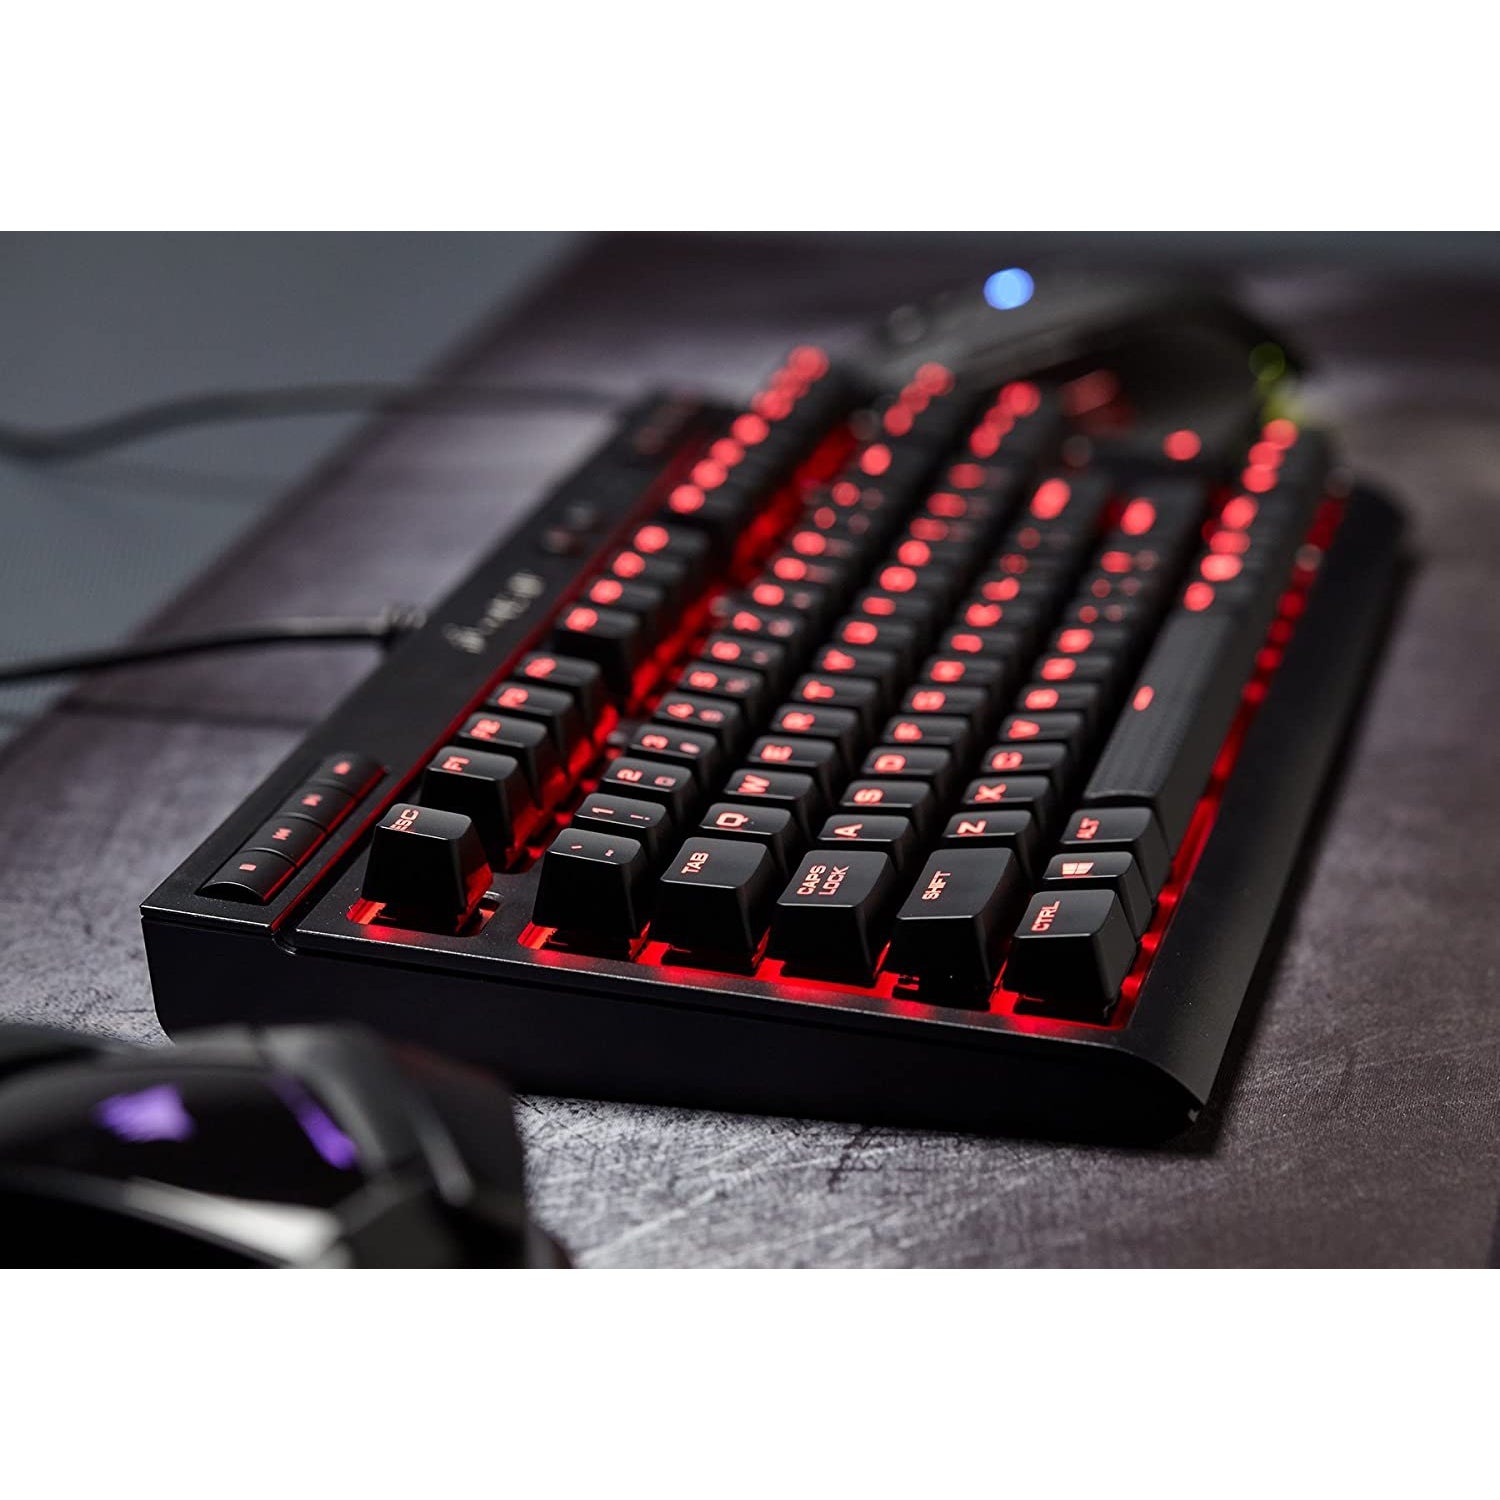 Corsair Gaming K63 Cherry MX Backlit Mechanical Gaming Keyboard